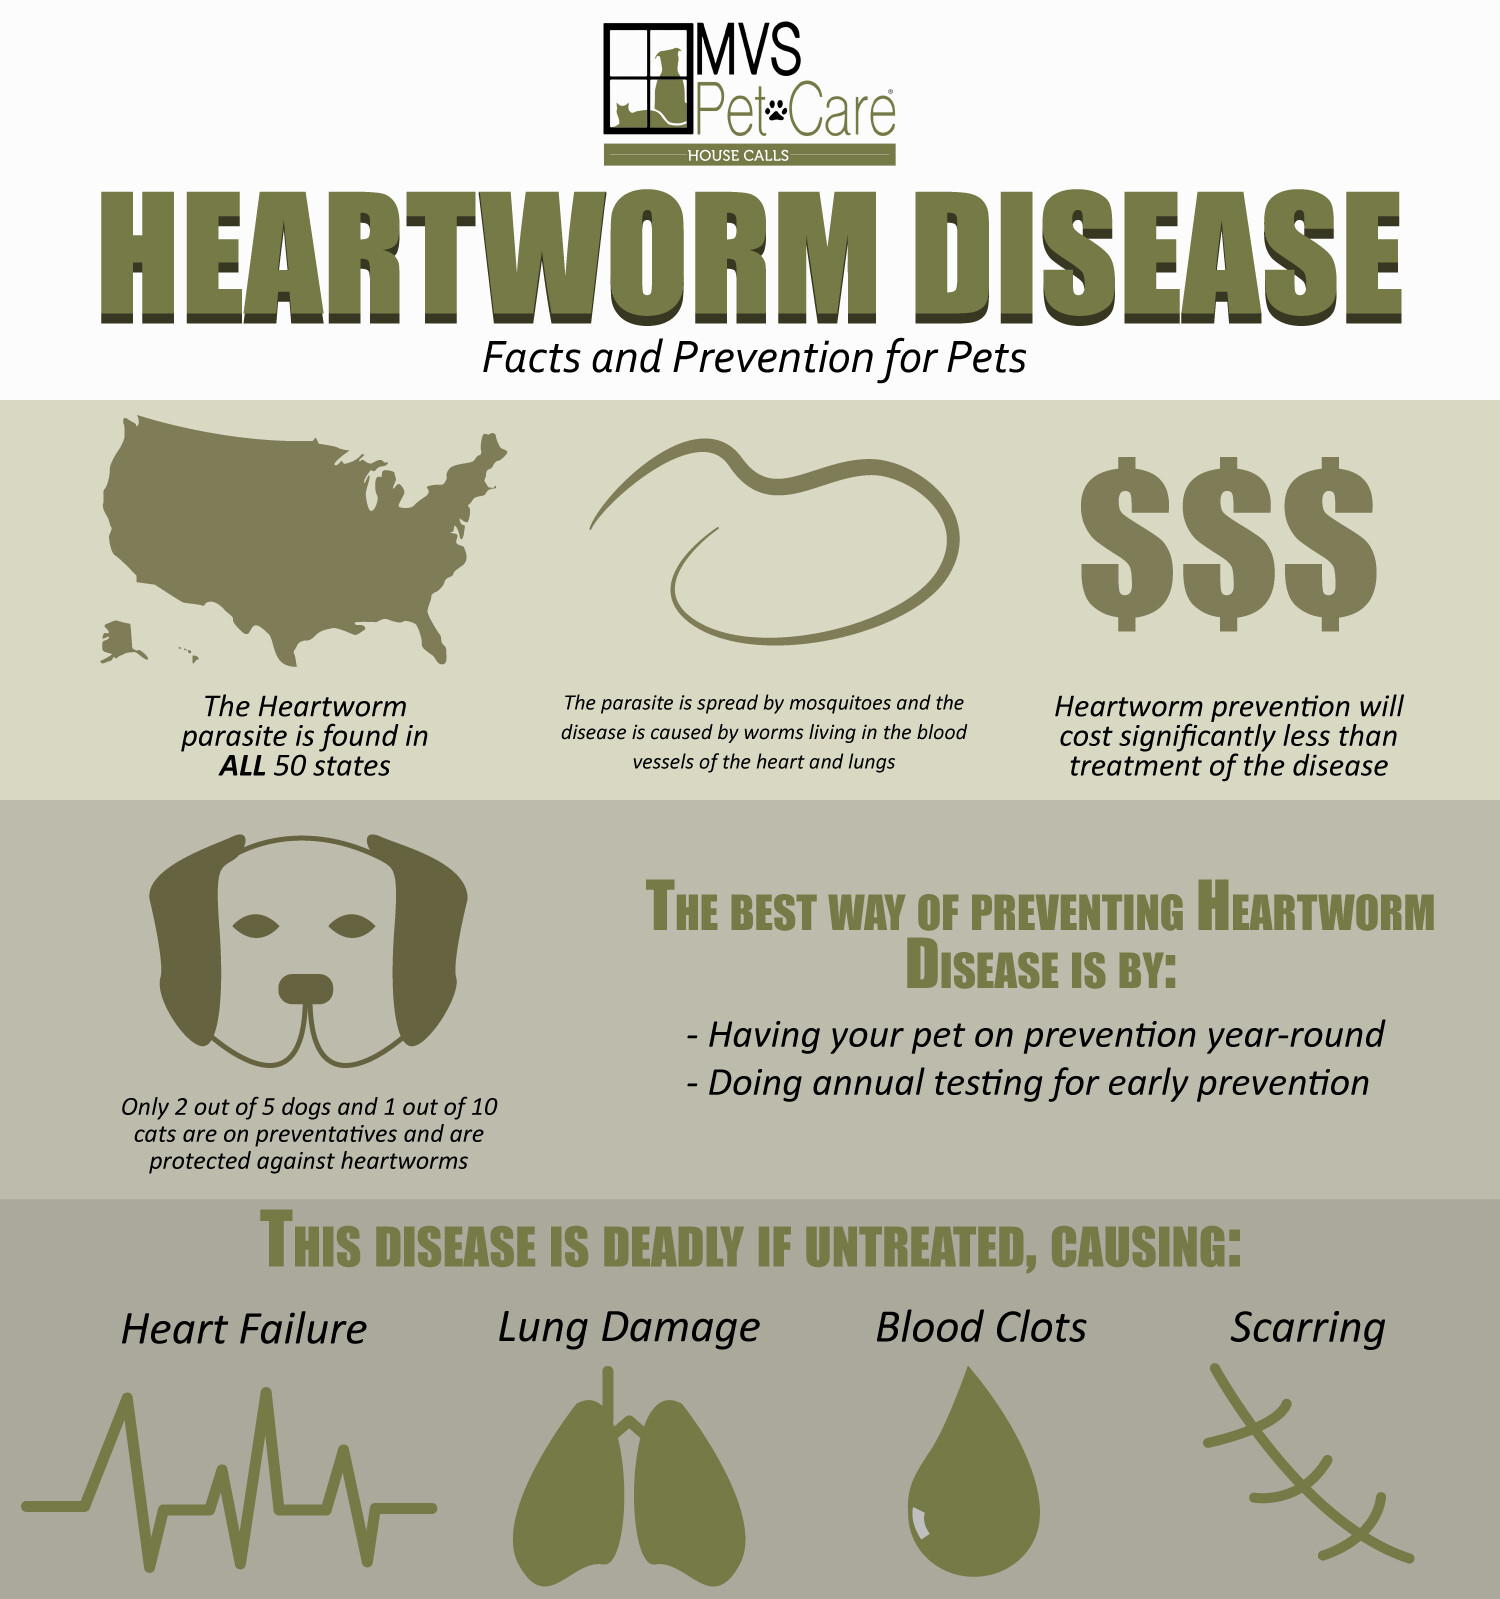 ArtStation - MVS Pet Care Heartworn Disease Infographic